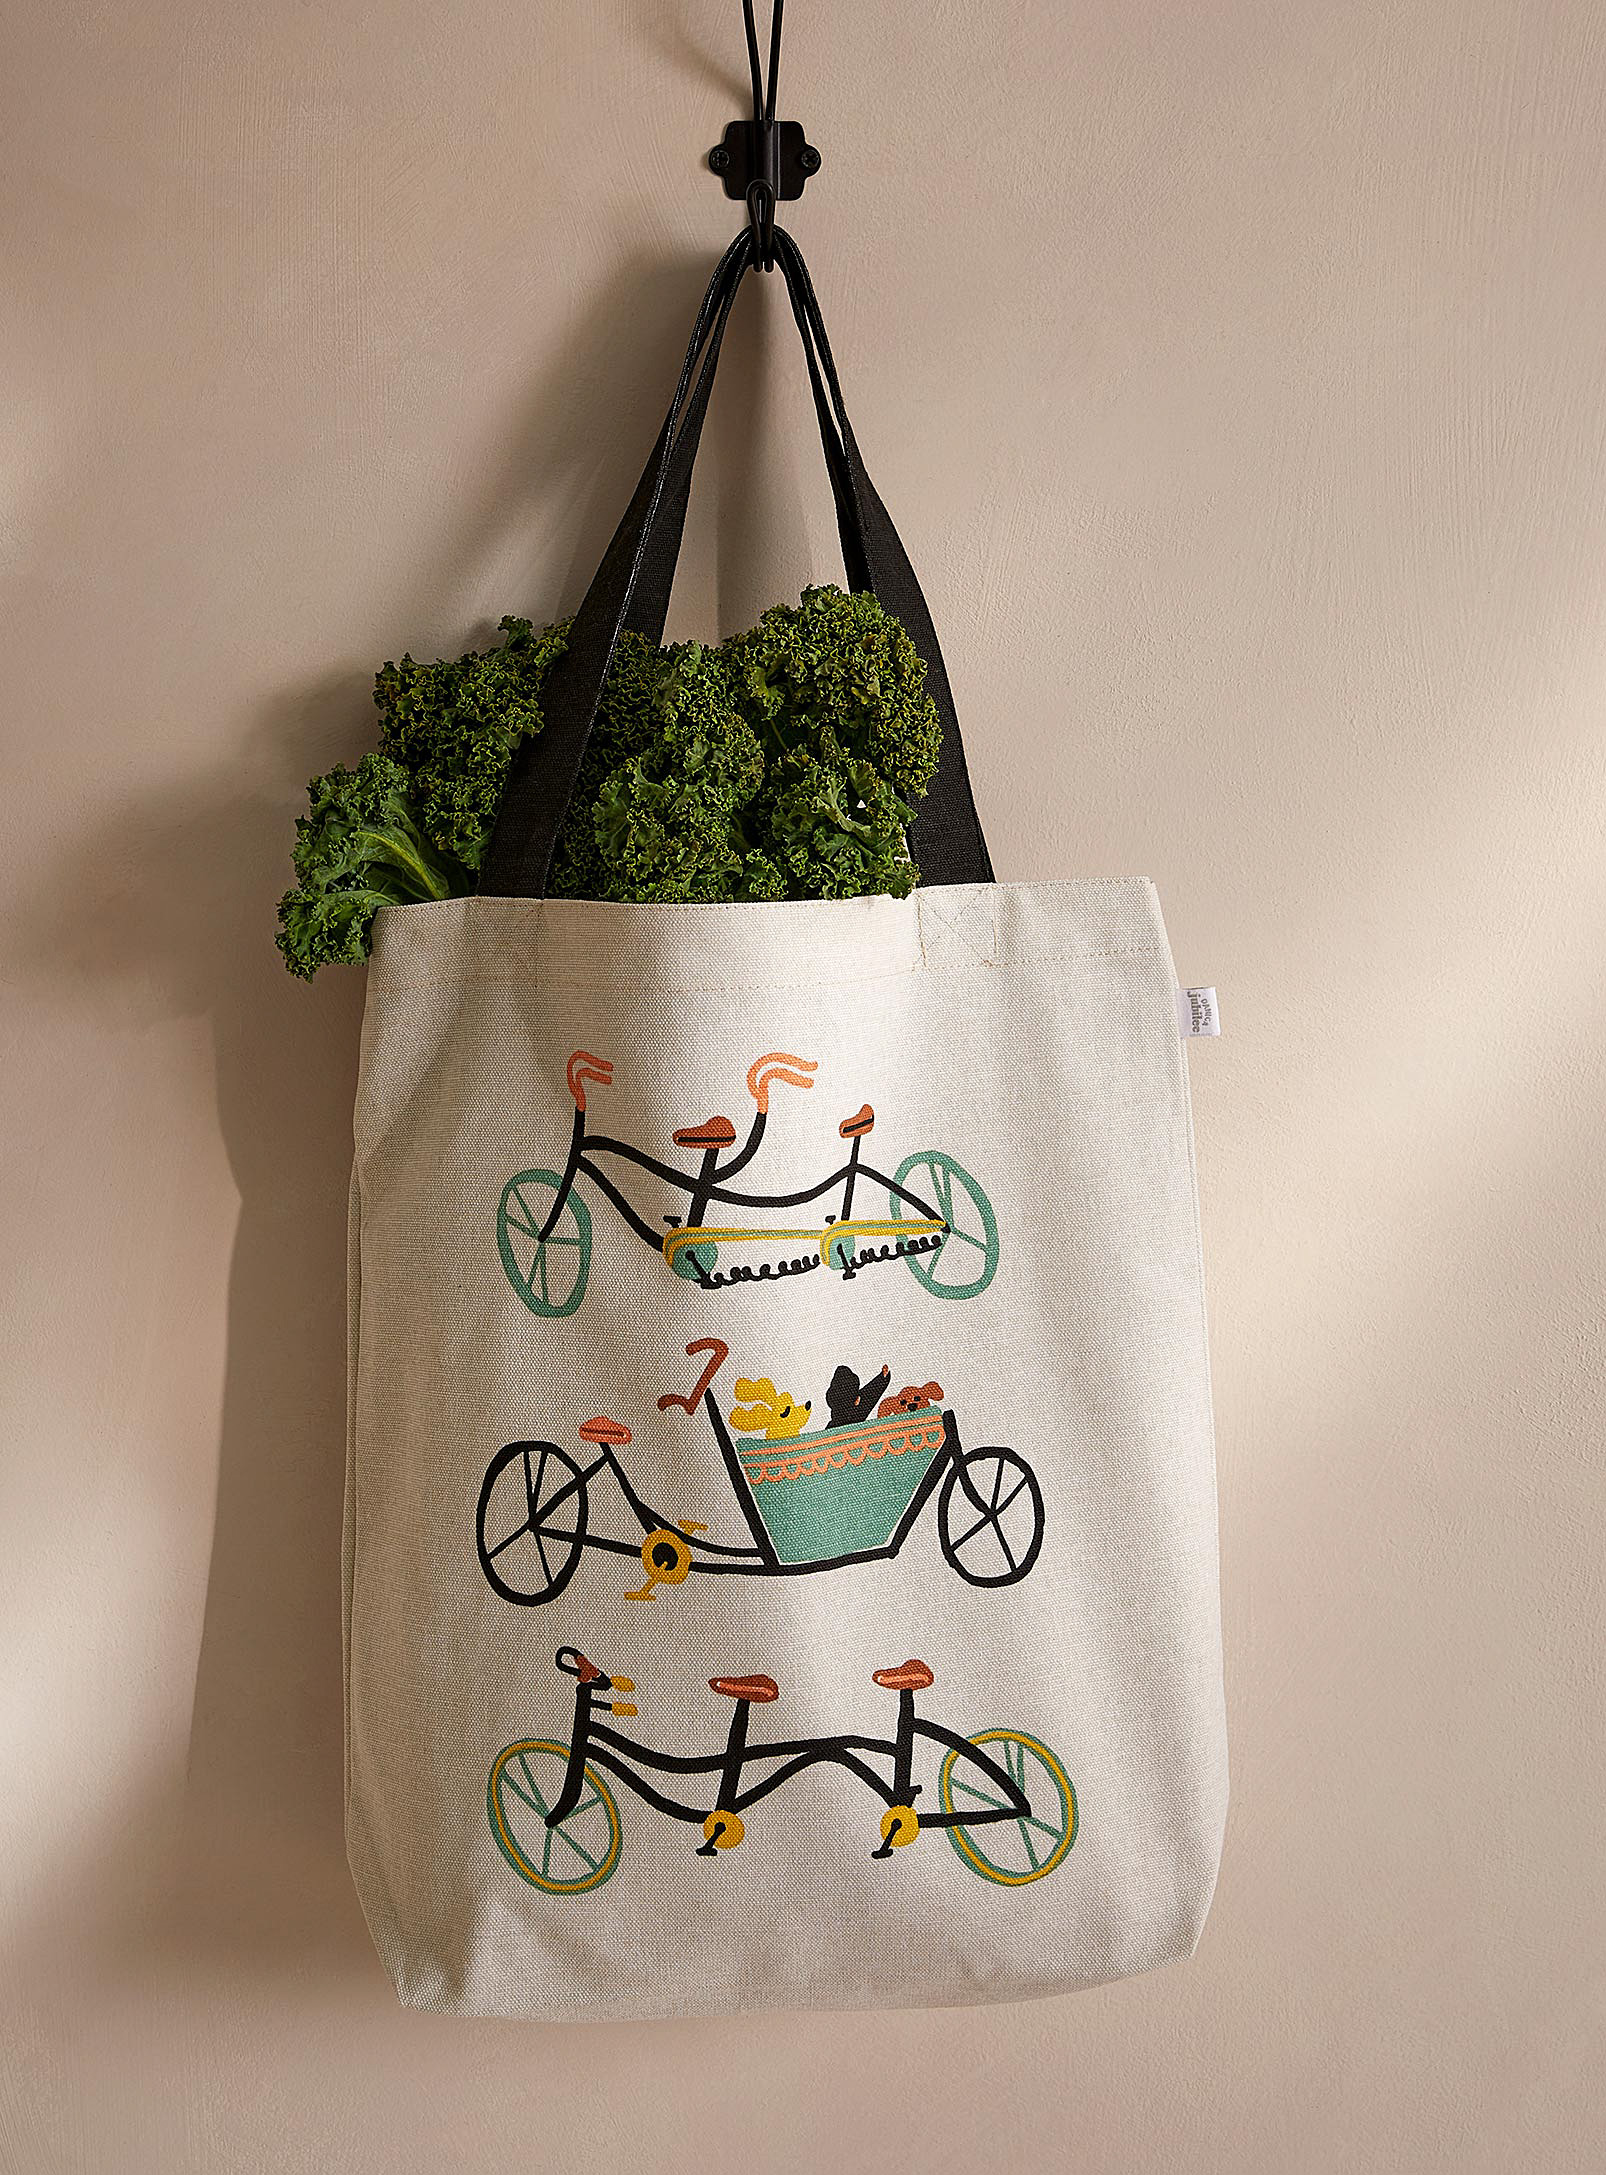 Danica - Tandem bicycle ride reusable bag